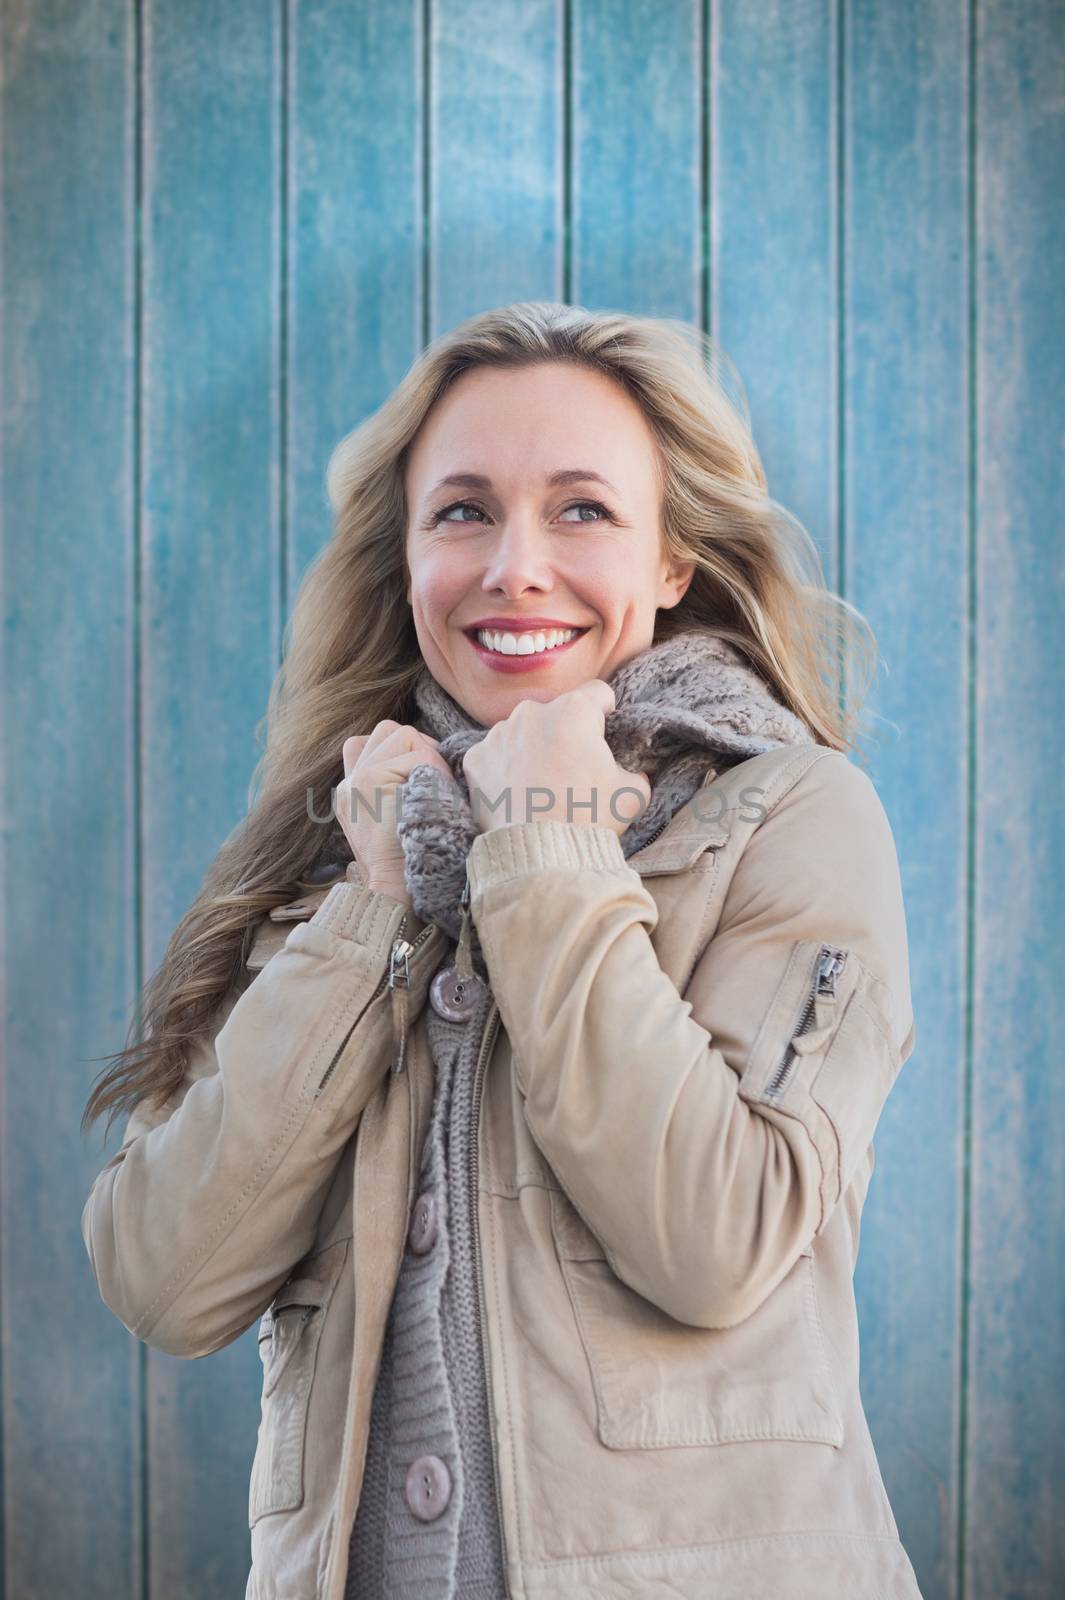 Composite image of smiling blonde by Wavebreakmedia